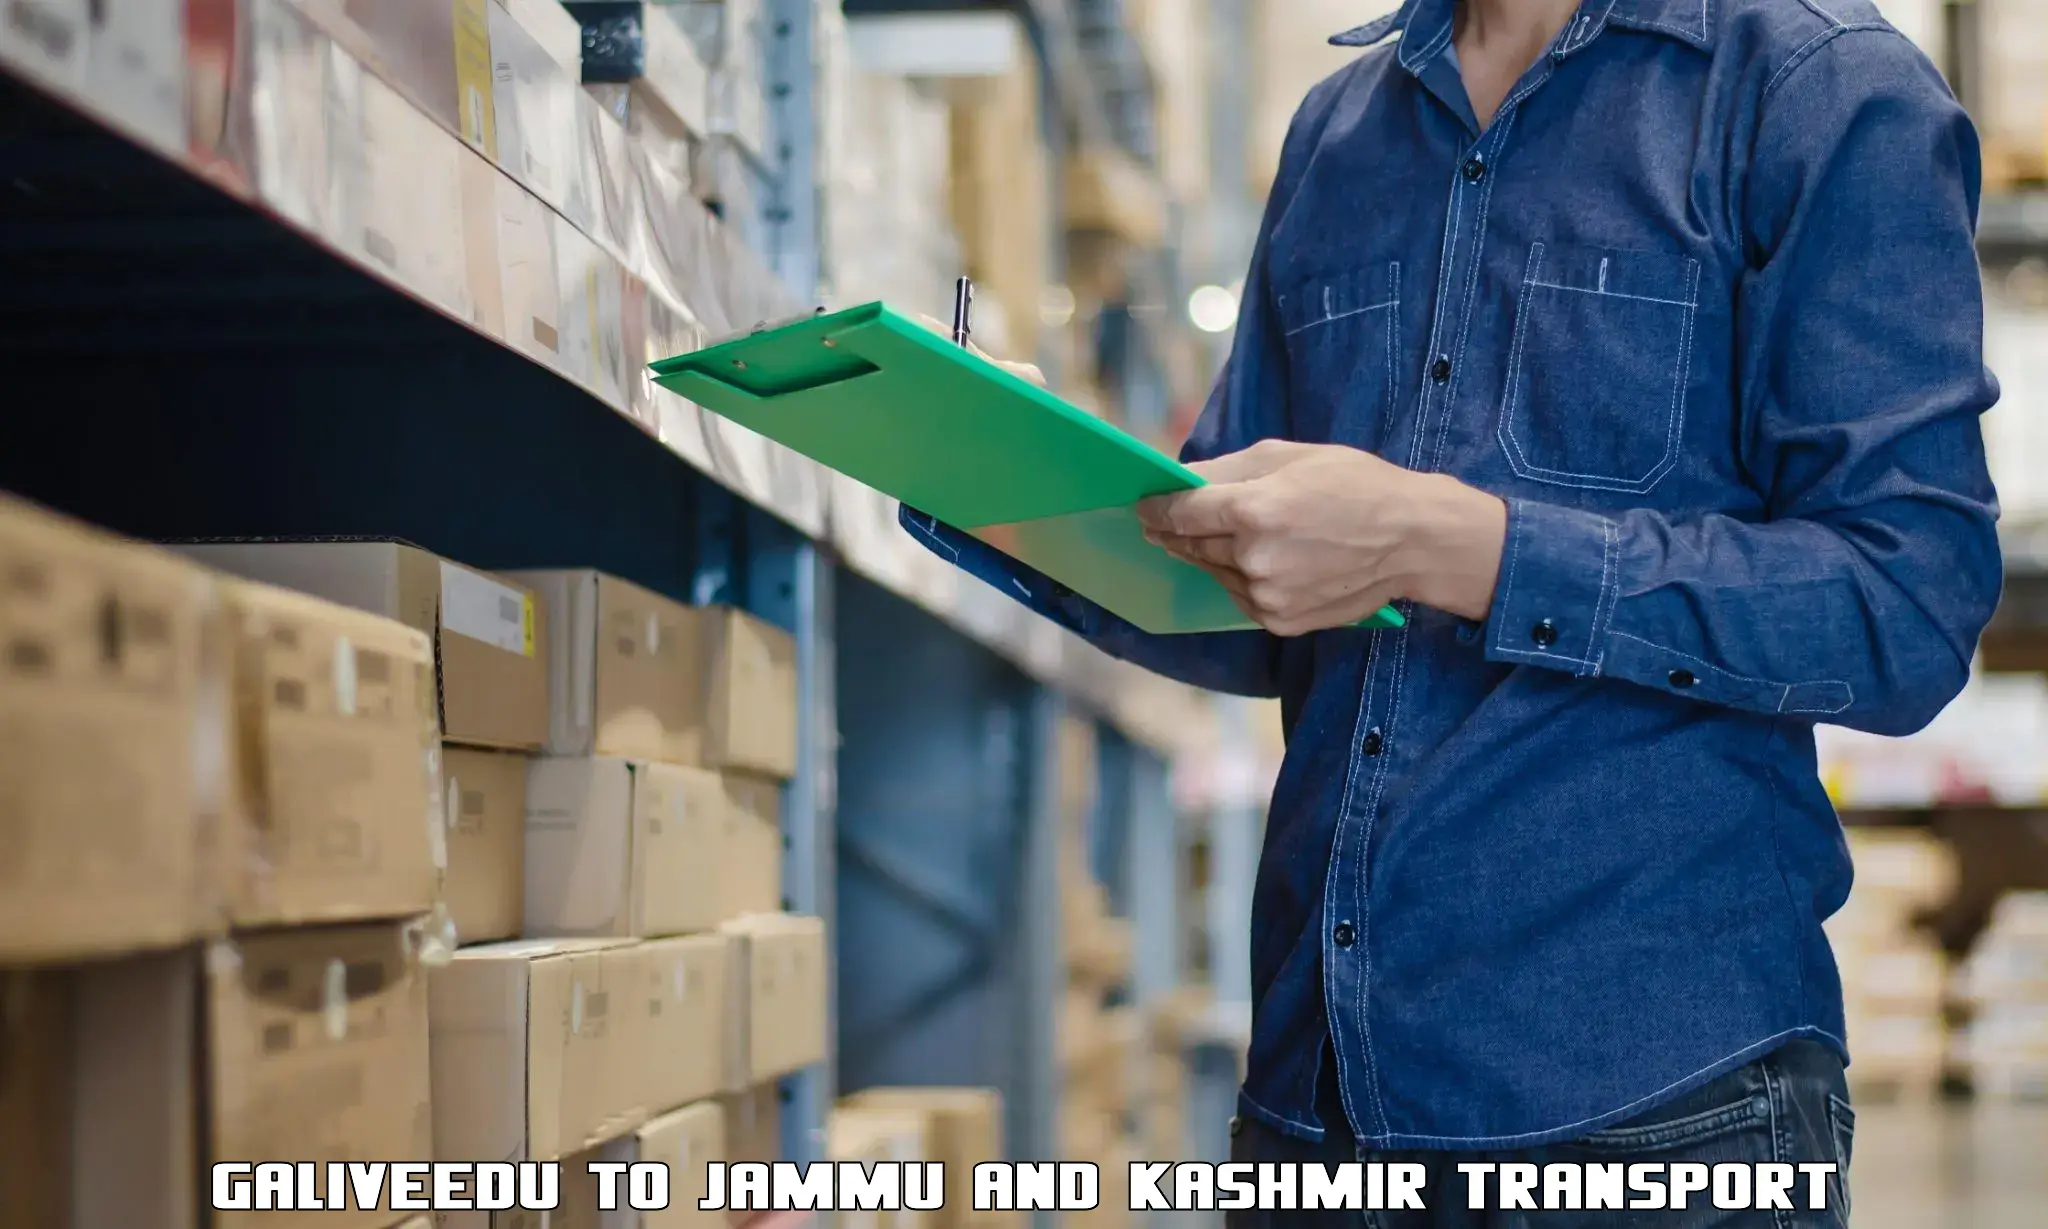 Transportation services Galiveedu to IIT Jammu